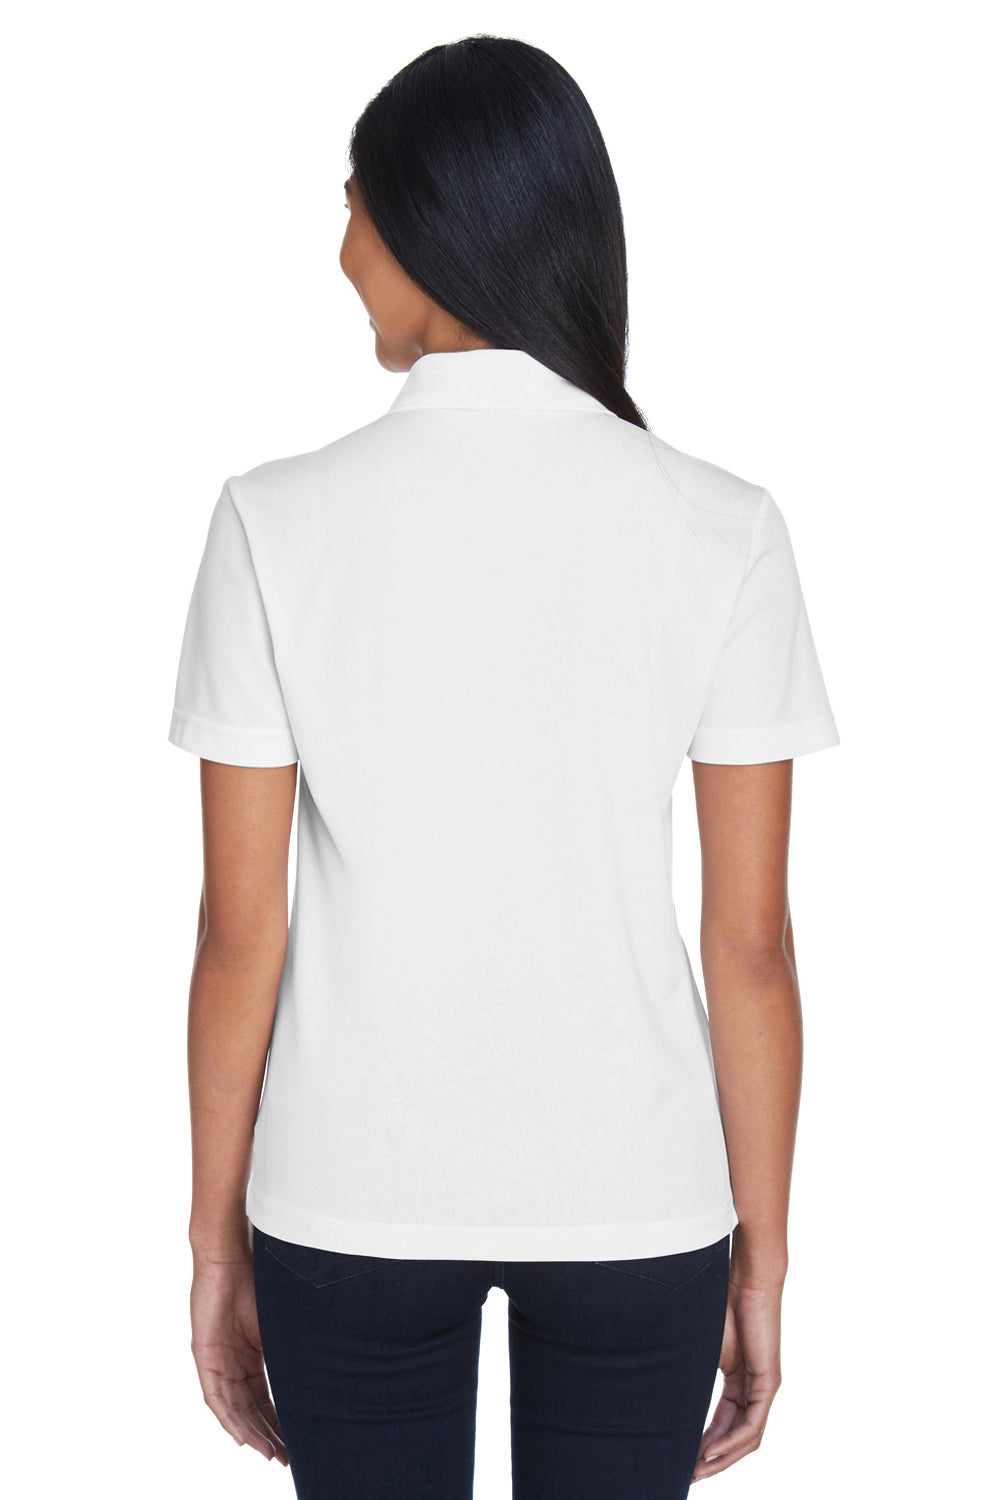 Core 365 78181P Womens Origin Performance Moisture Wicking Short Sleeve Polo Shirt w/ Pocket White Back